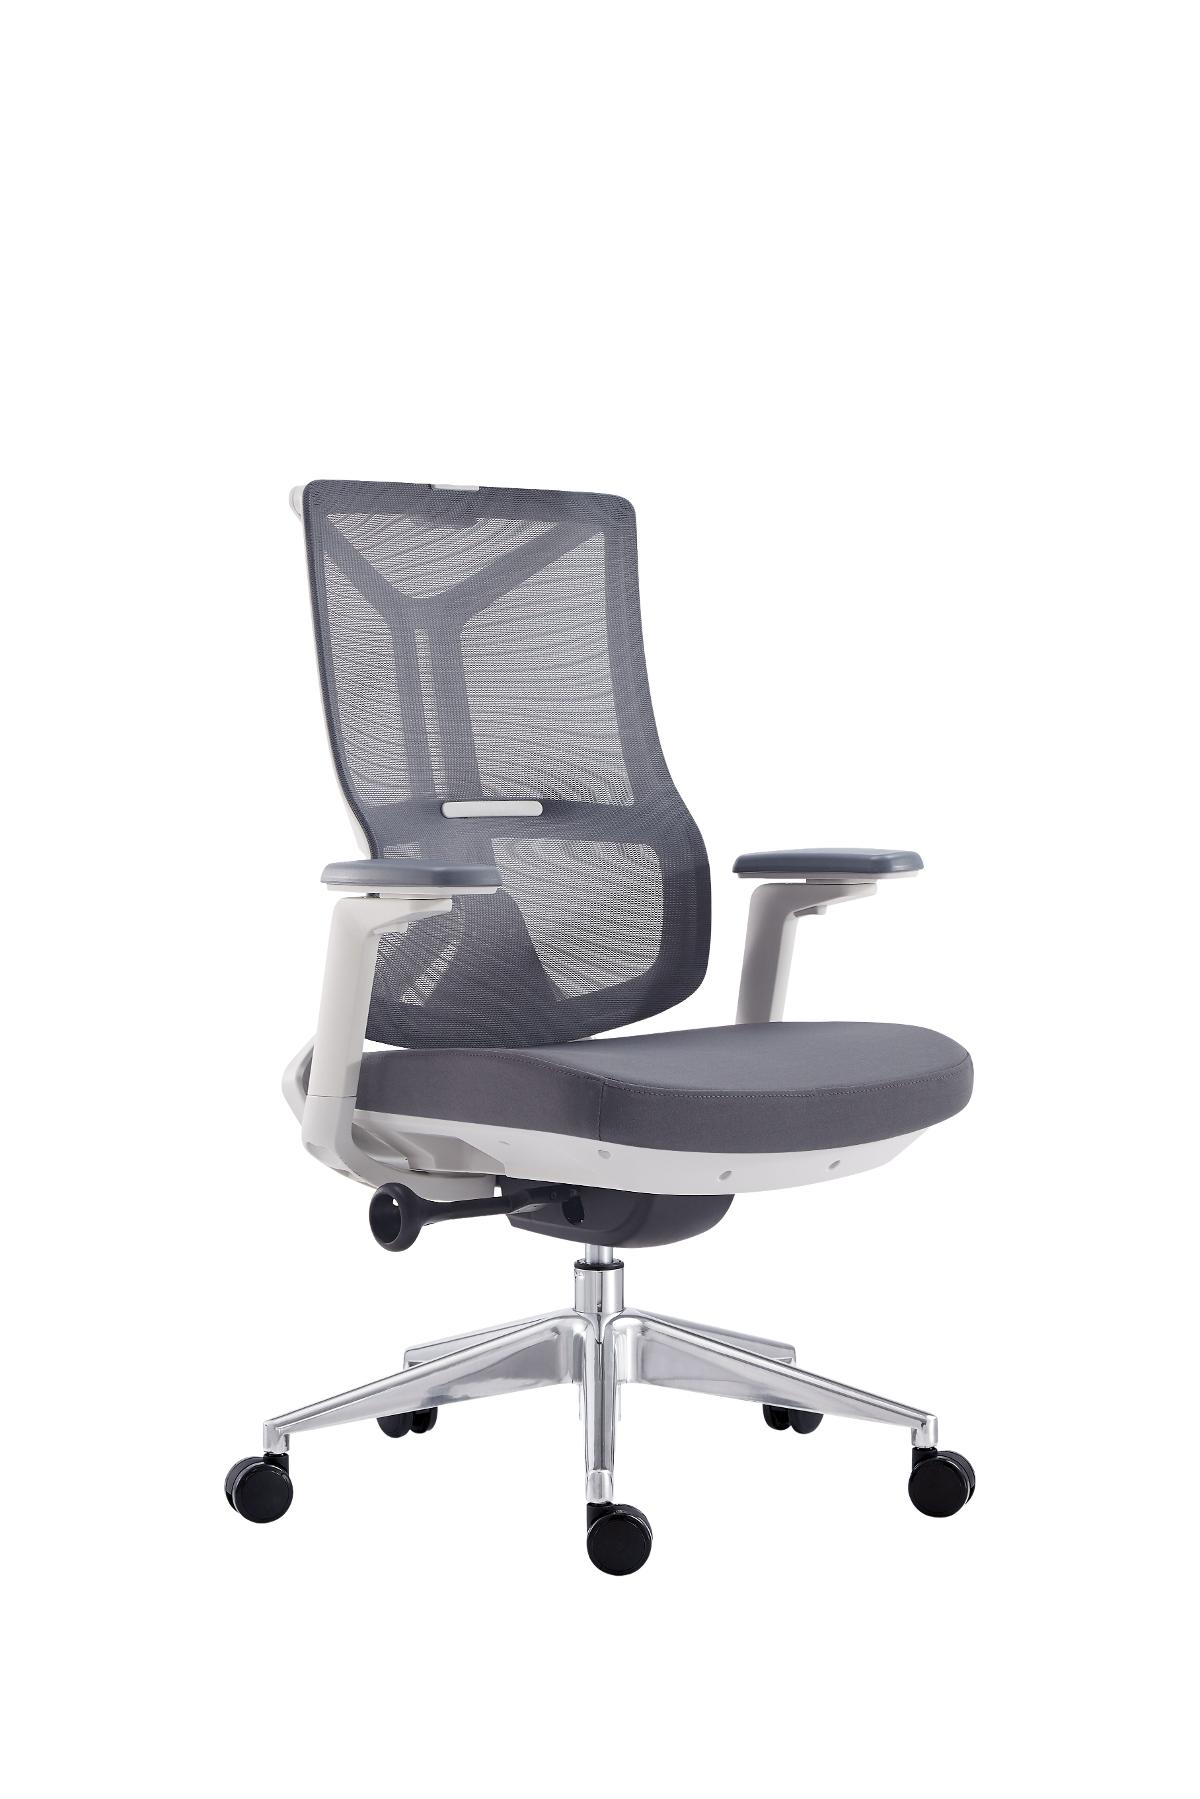 Super Chair เก้าอี้สำนักงาน รุ่น WHITE M